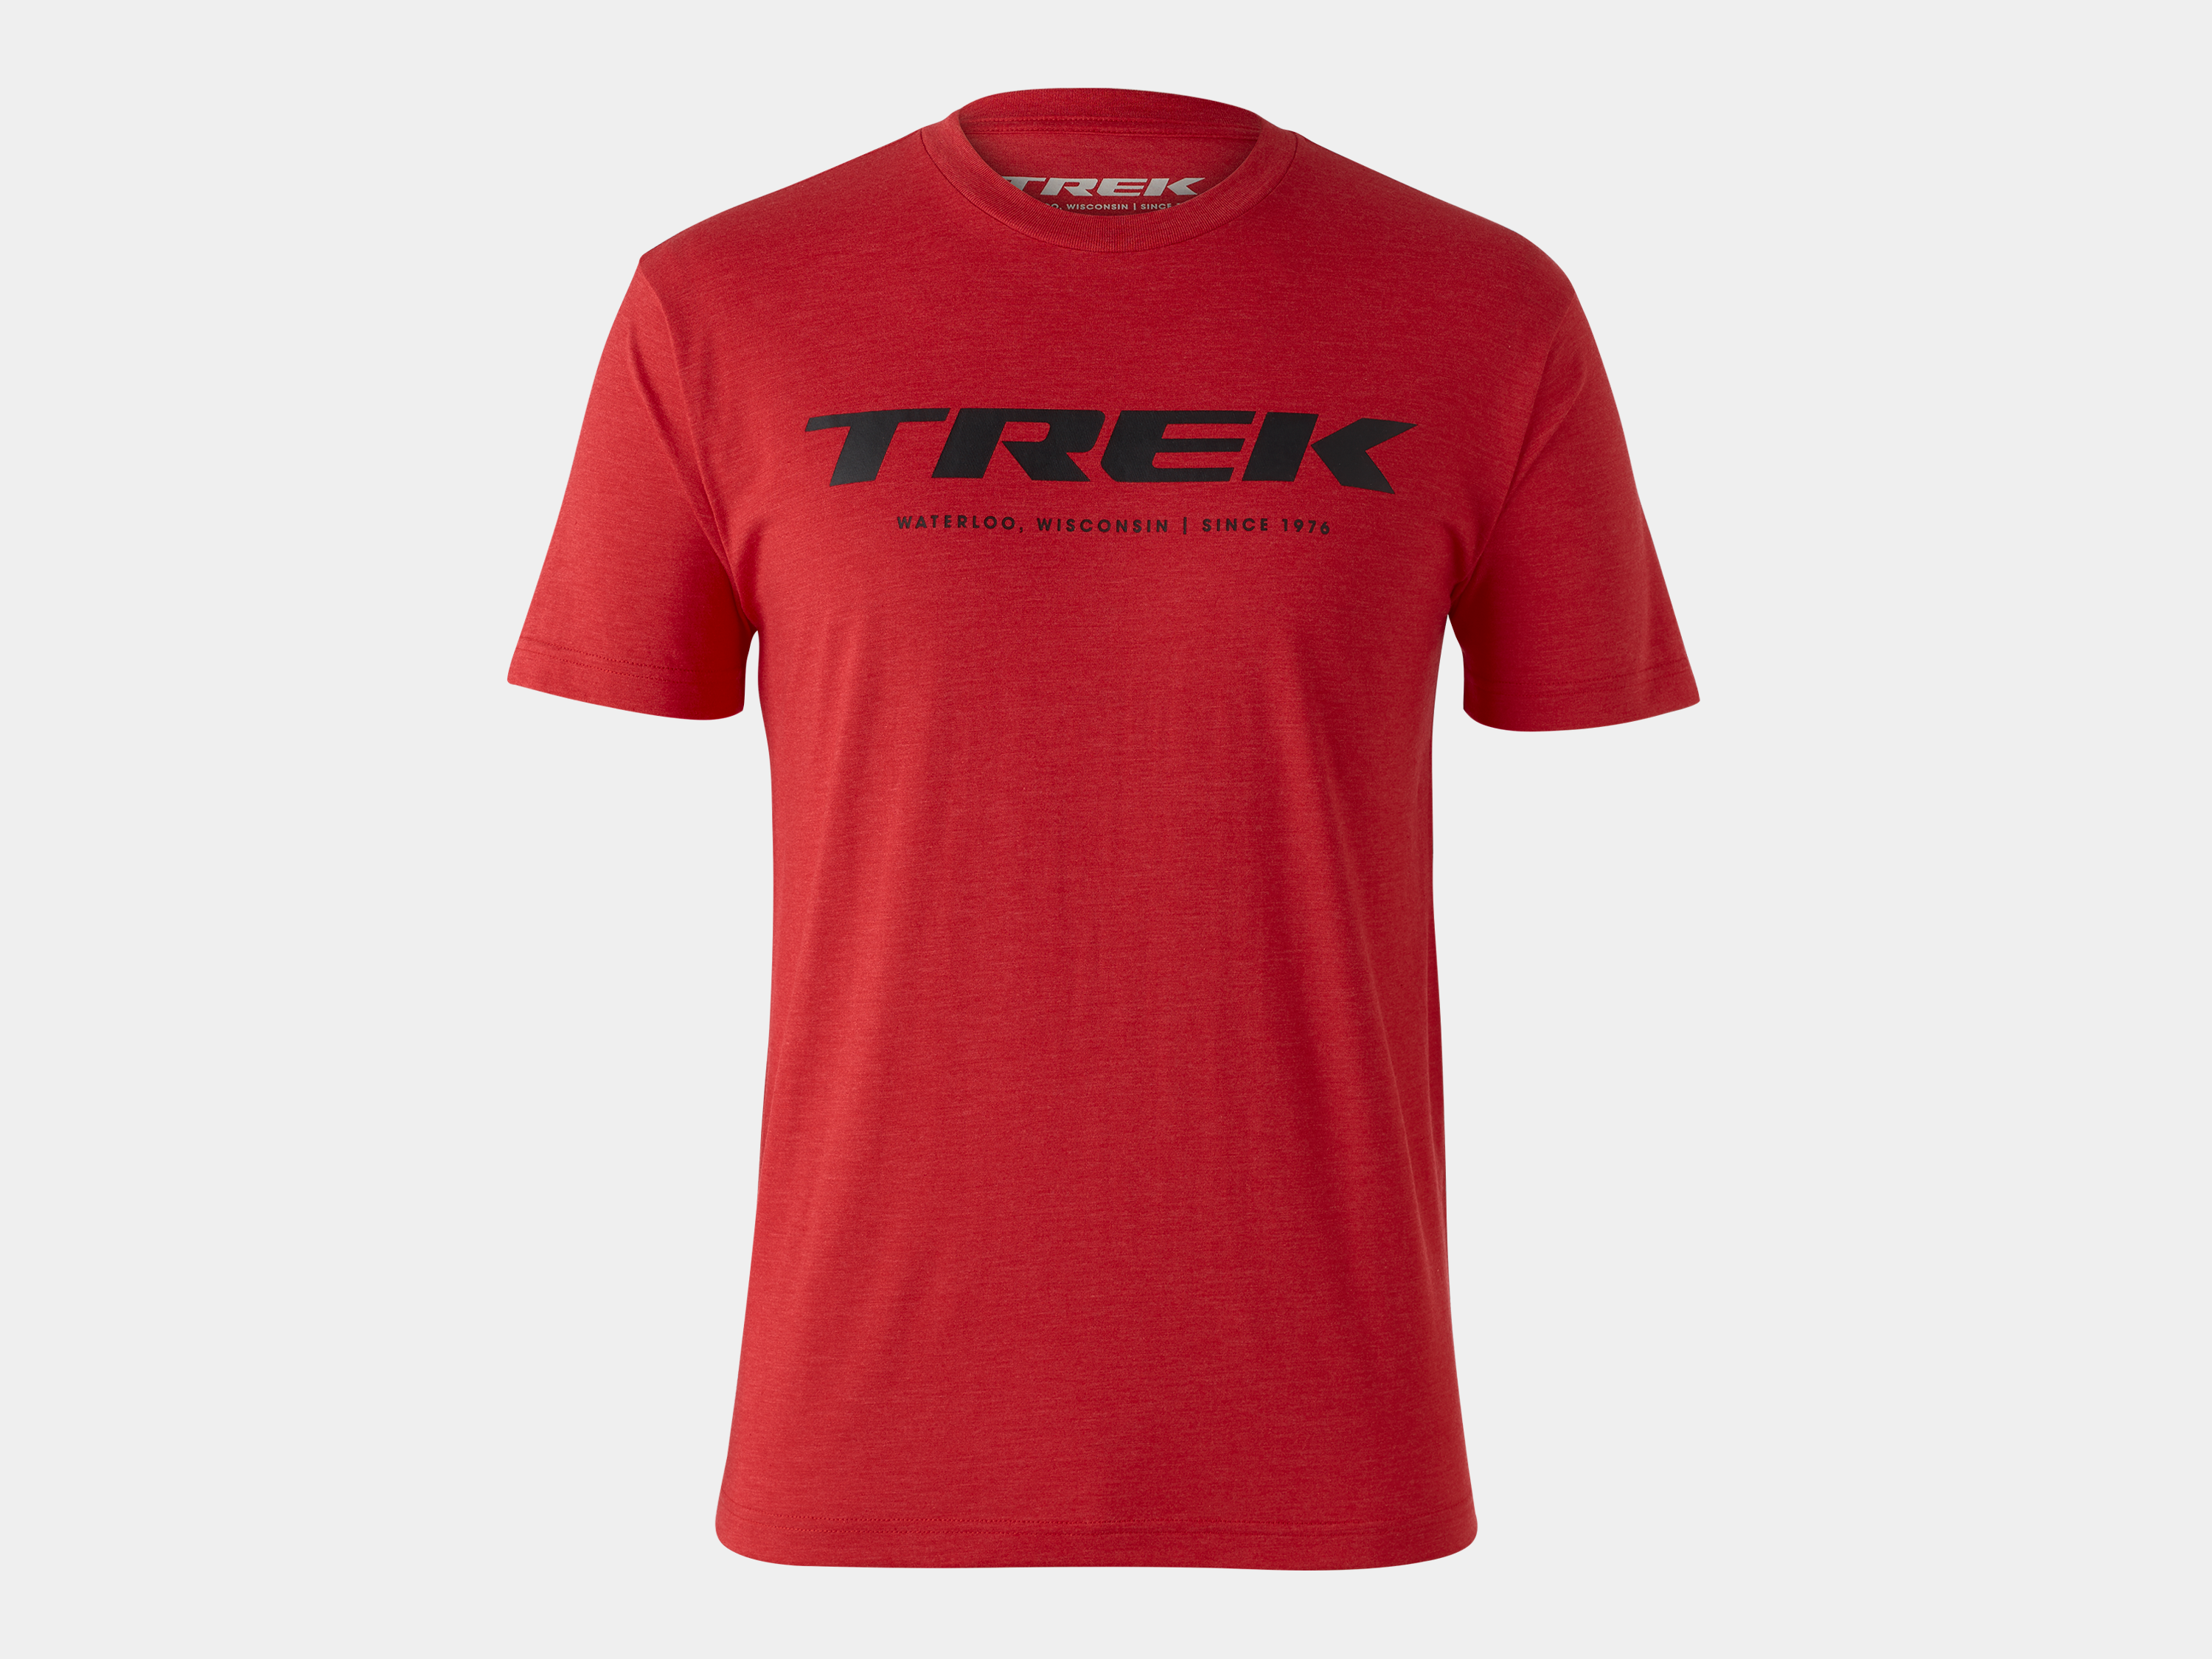 T-shirt Trek Original